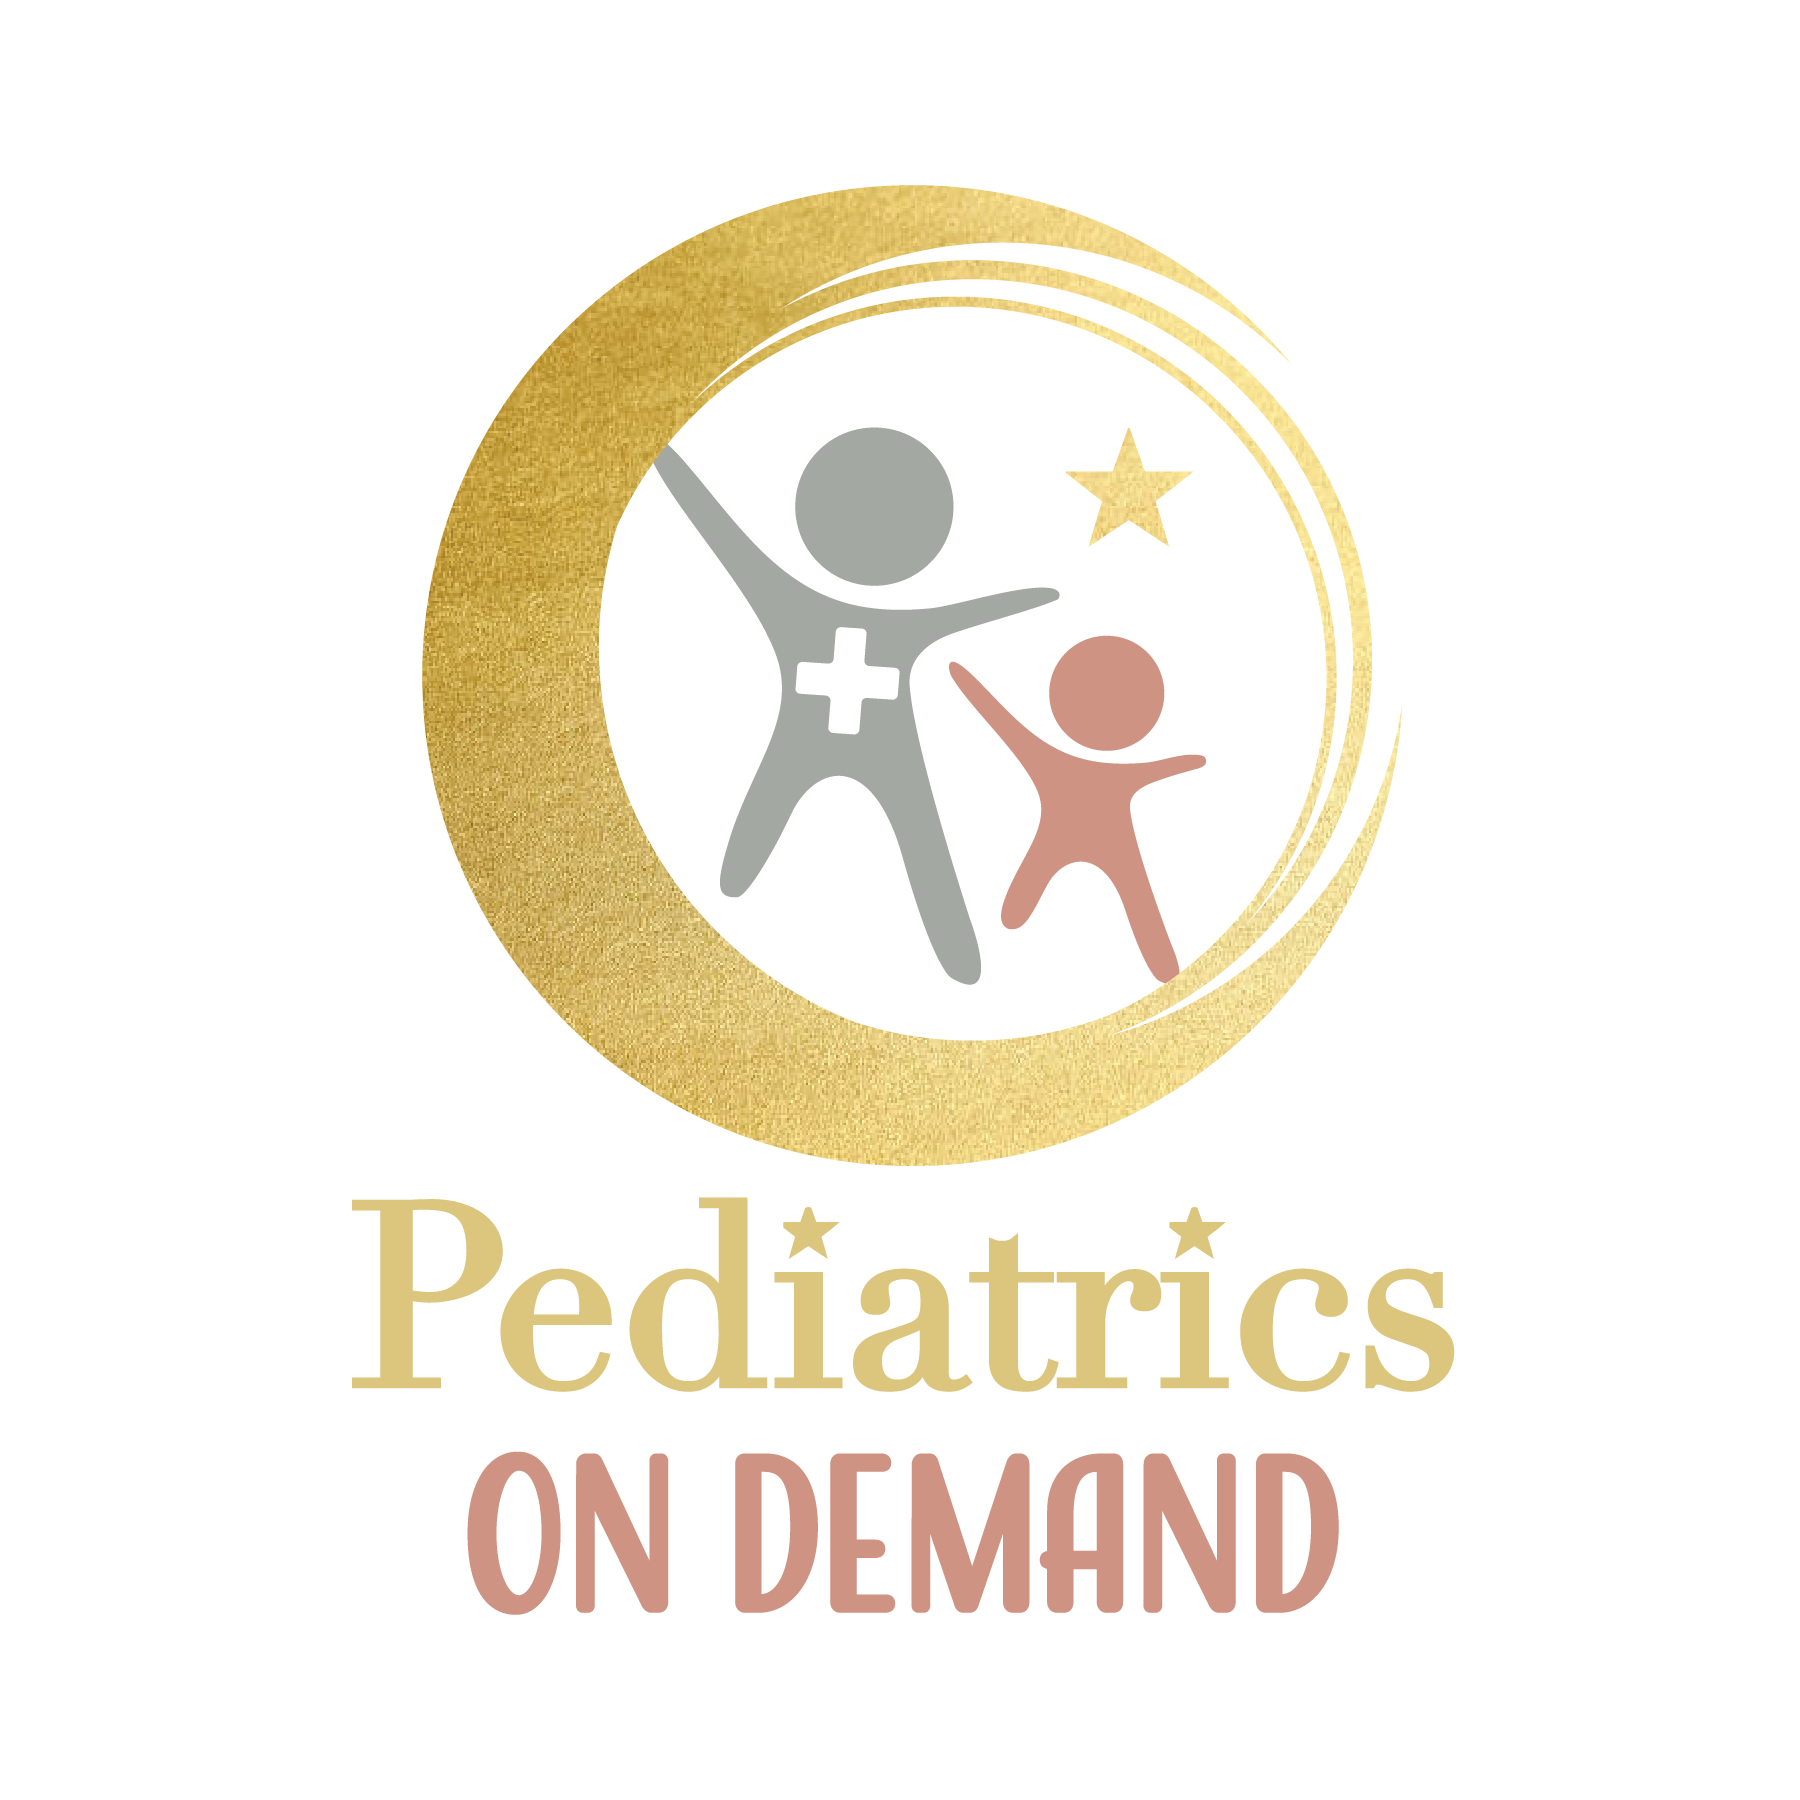 Your Local Pediatrics On Demand - Telemed Visit Logo